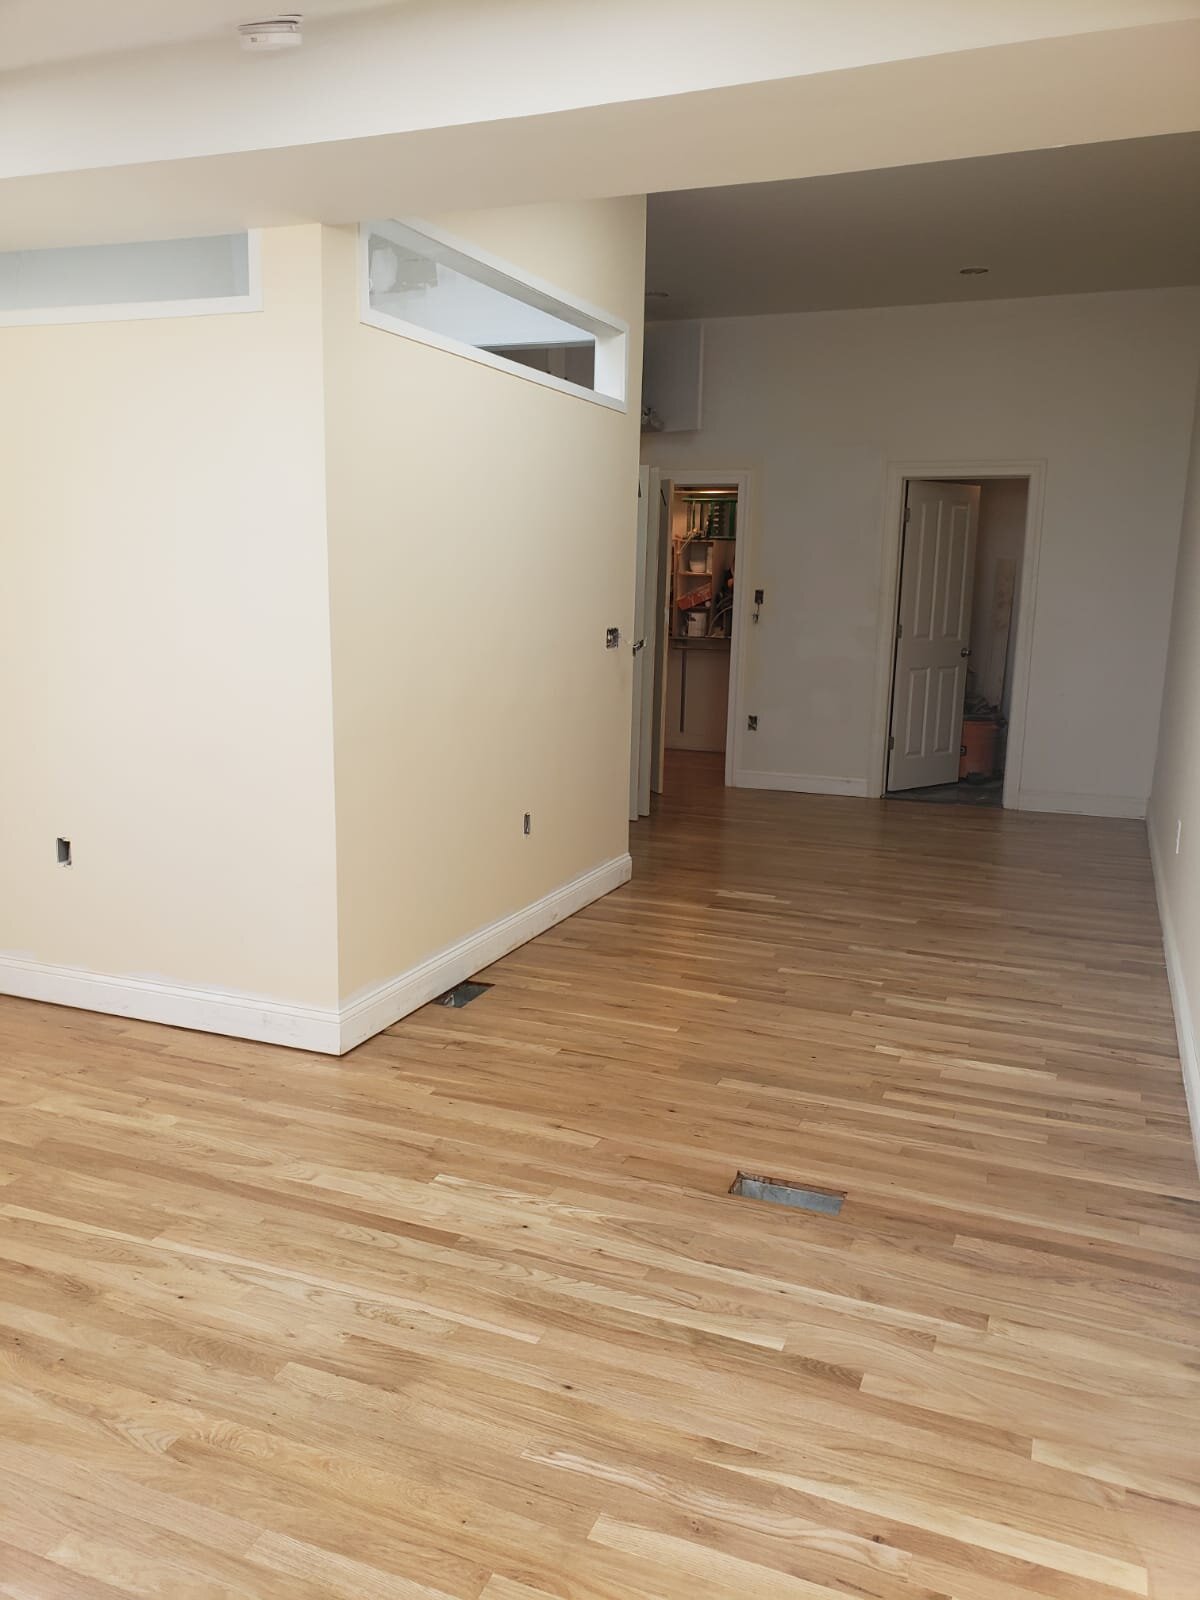 New loft build out - master bedroom suite